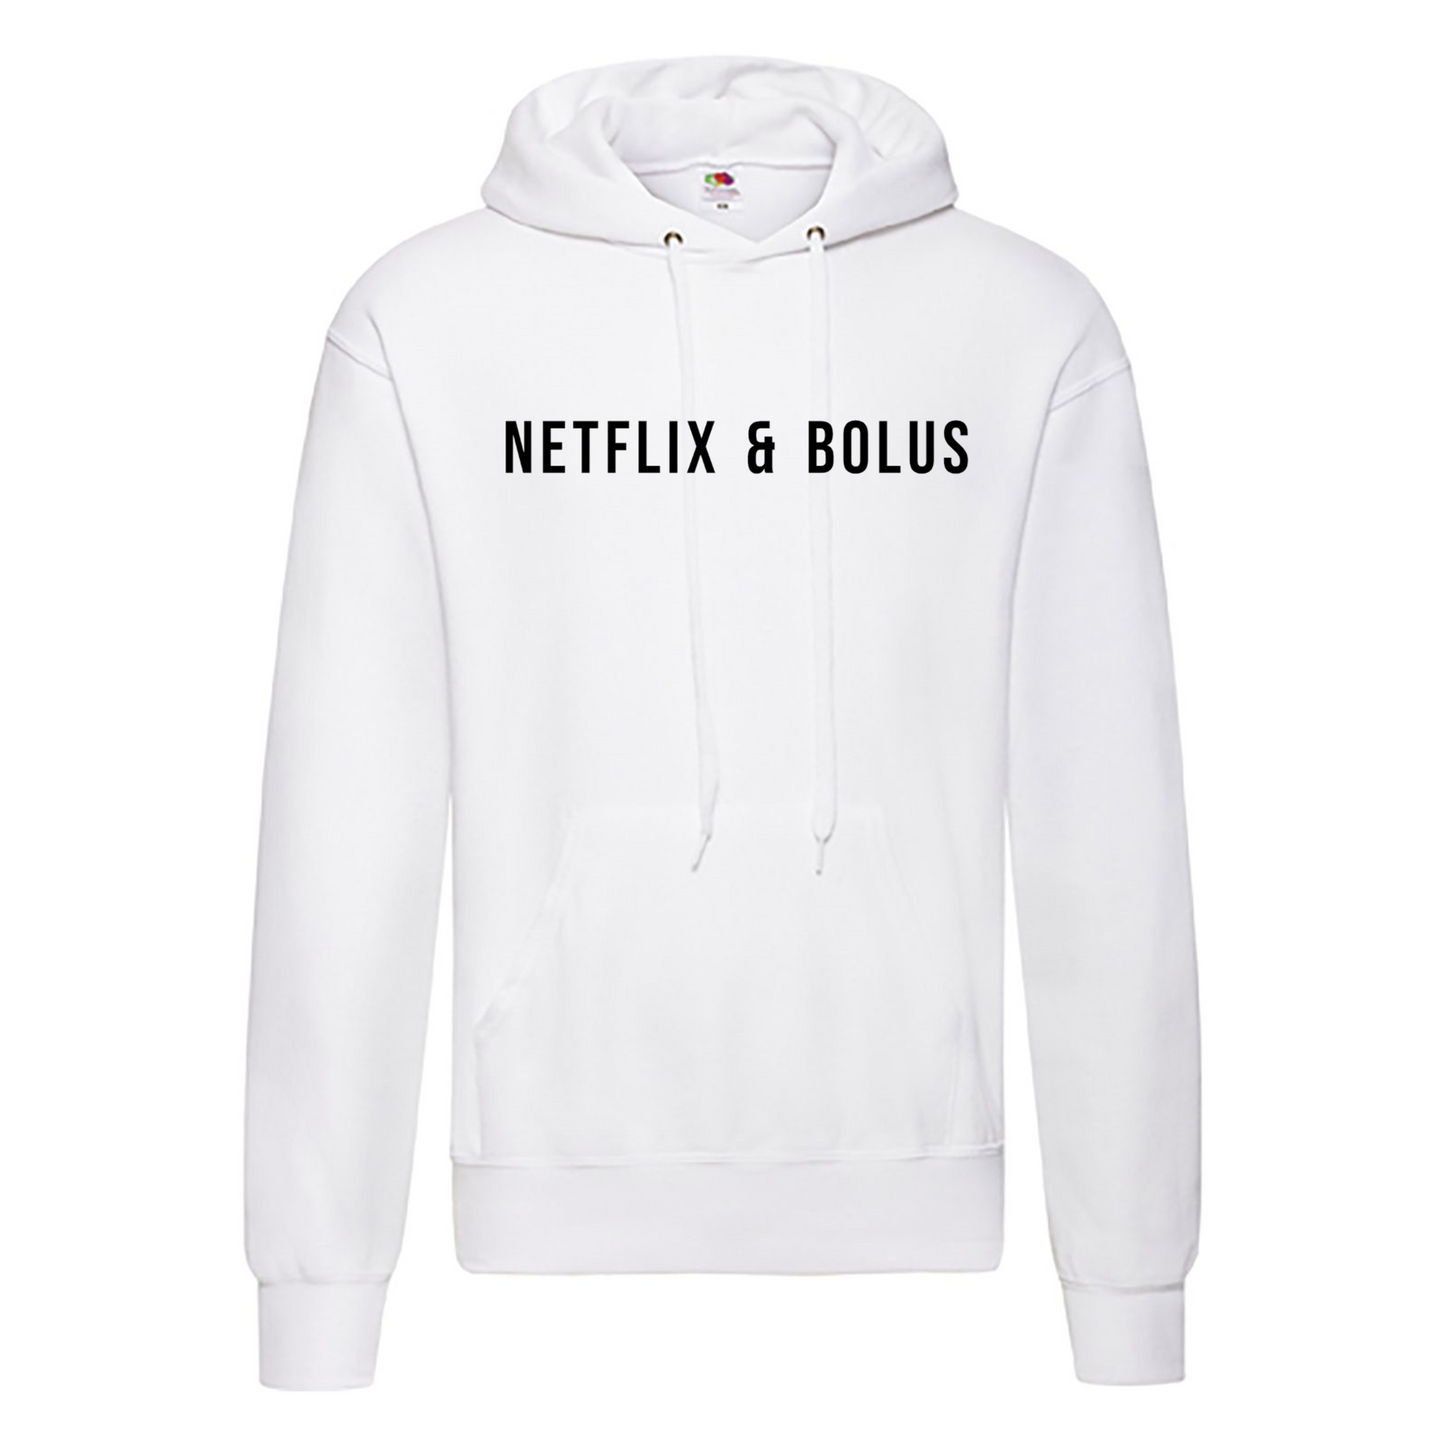 Netflix & Bolus Kids Hoodie